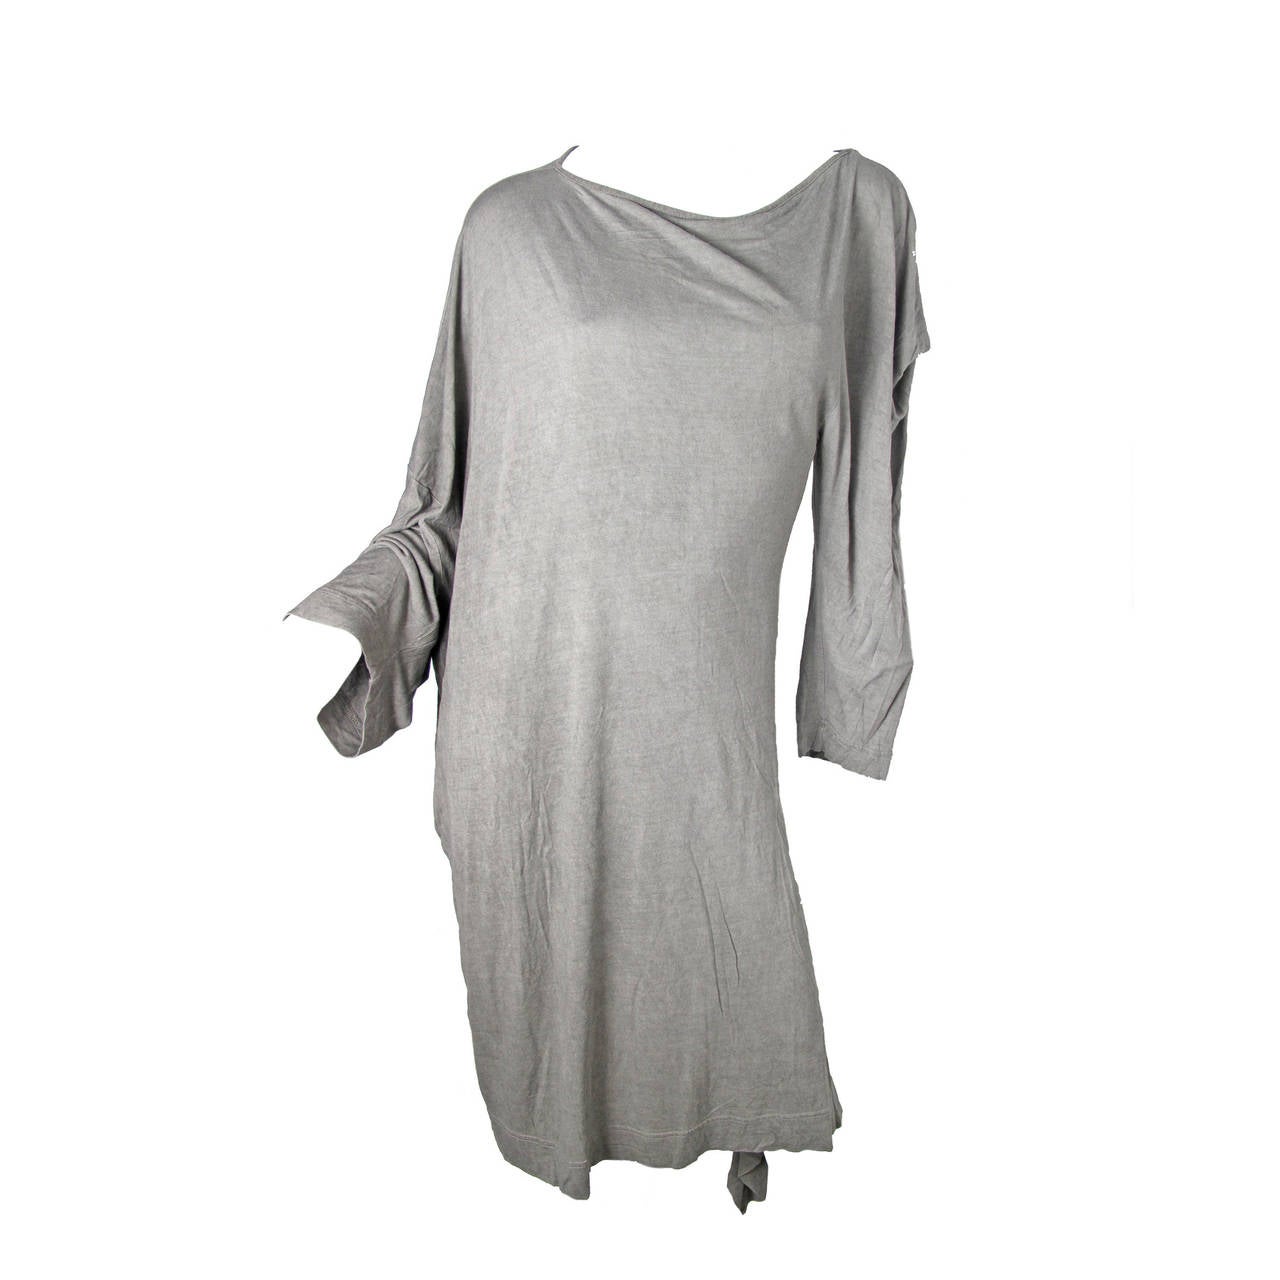 Vivienne Westwood Anglomania Grey Tee Shirt Dress